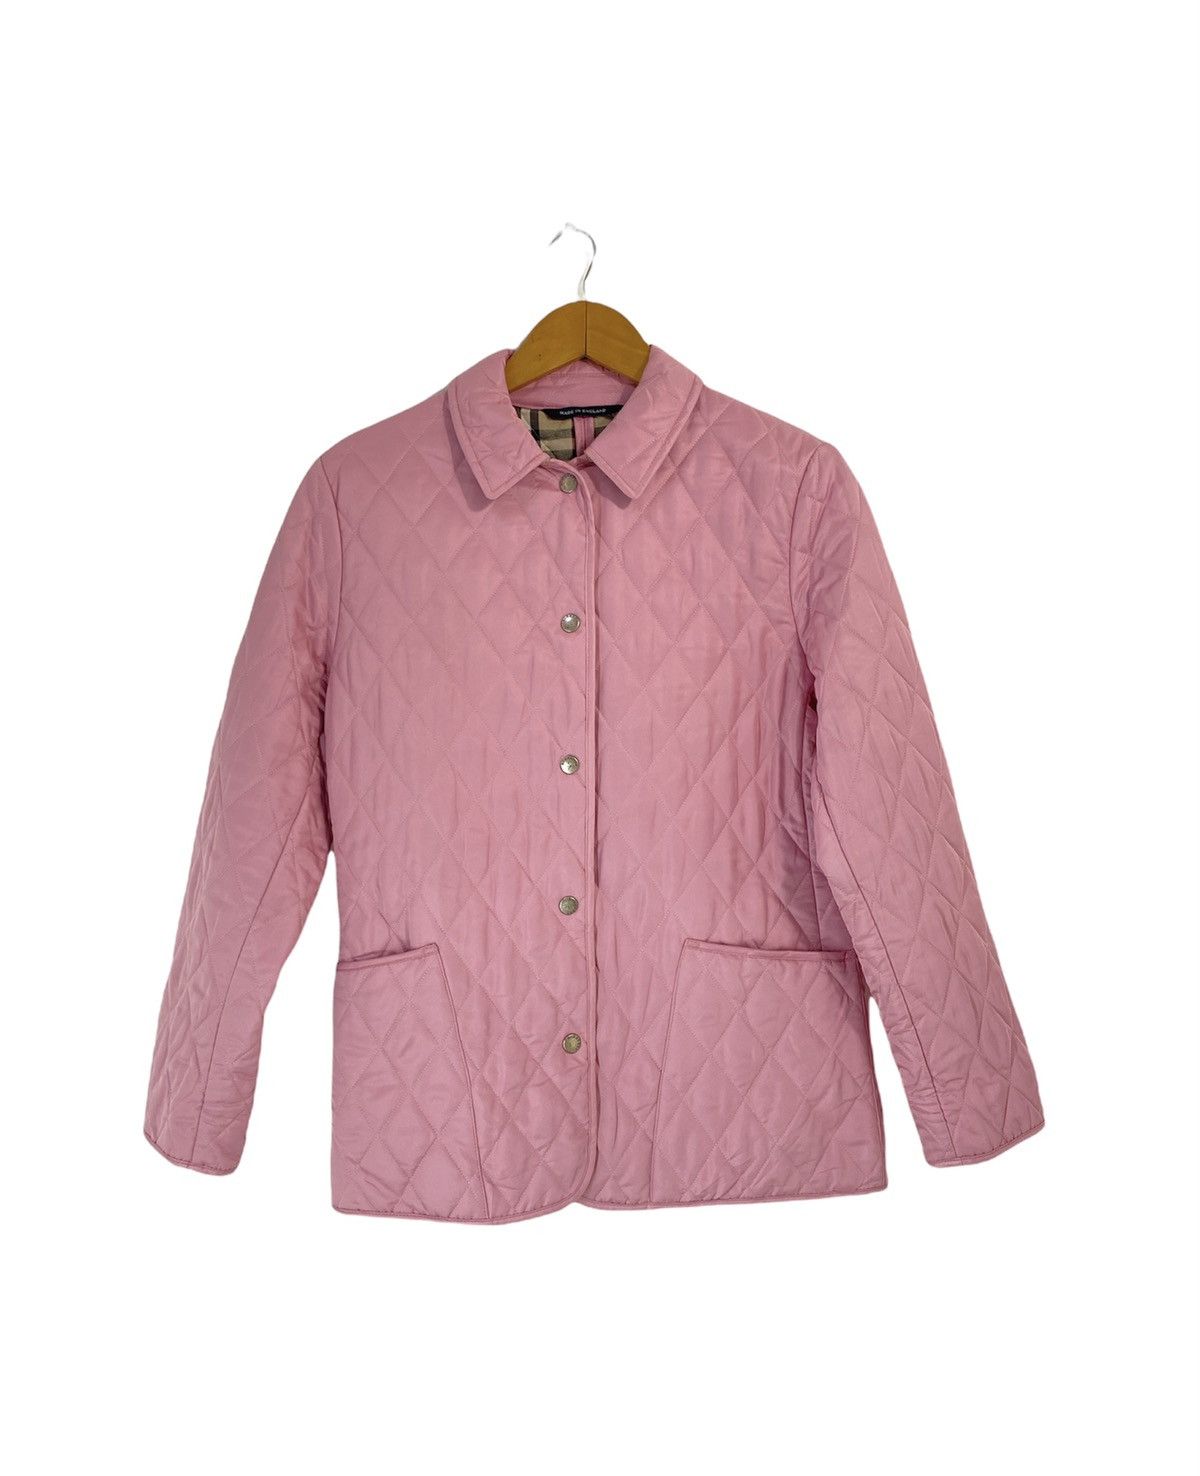 Burberry Quilted Jacket Design Pink Color Nova Check - 1